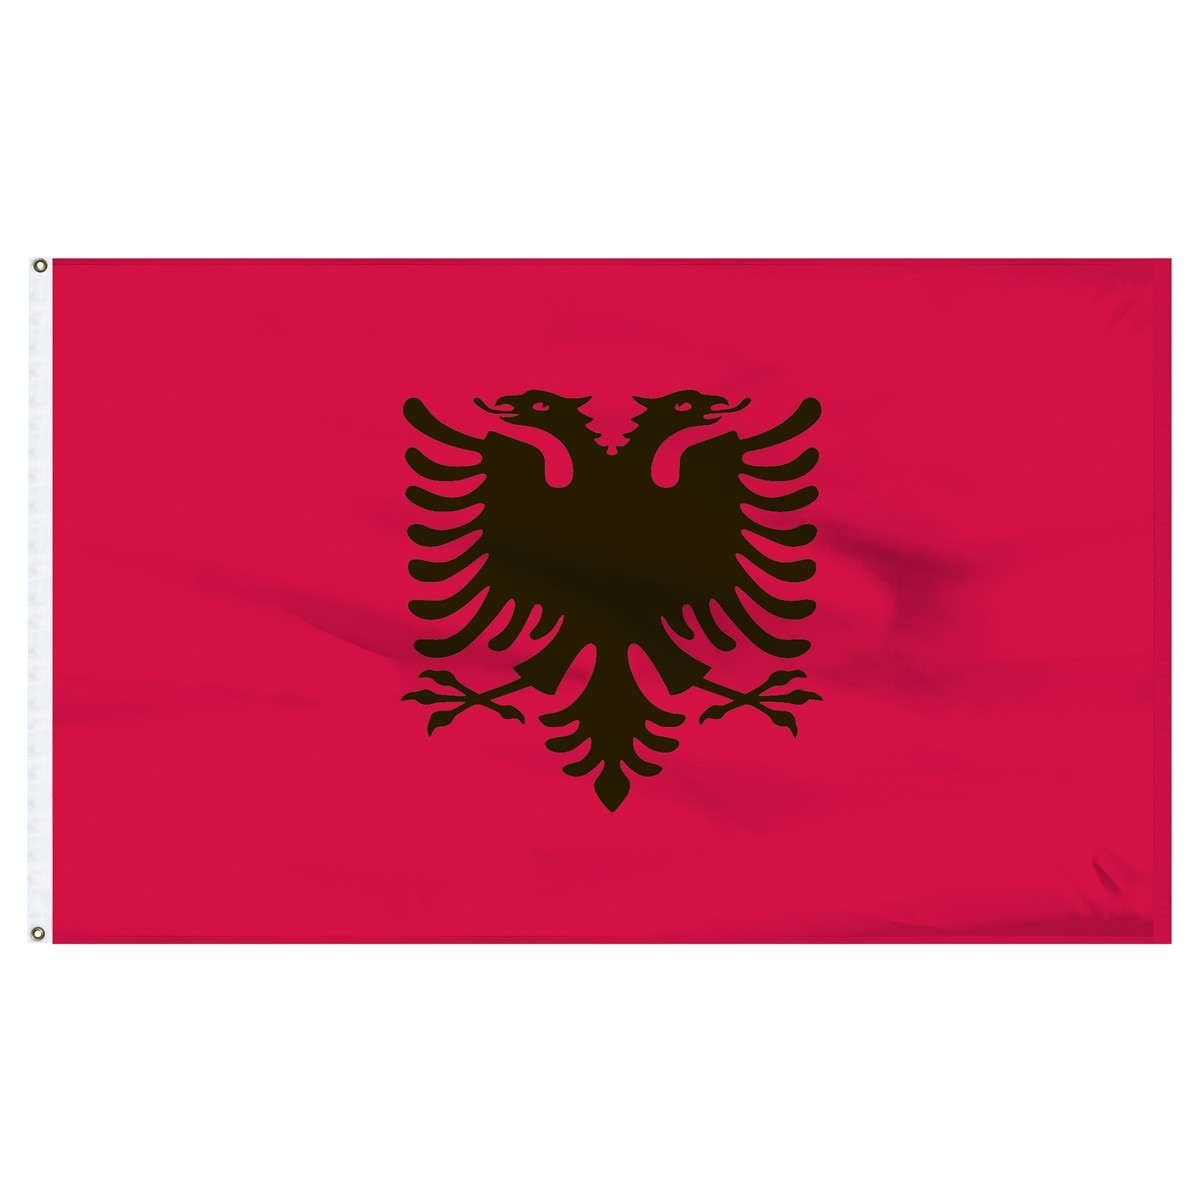 Albania 2' x 3' Outdoor Nylon Country Flag